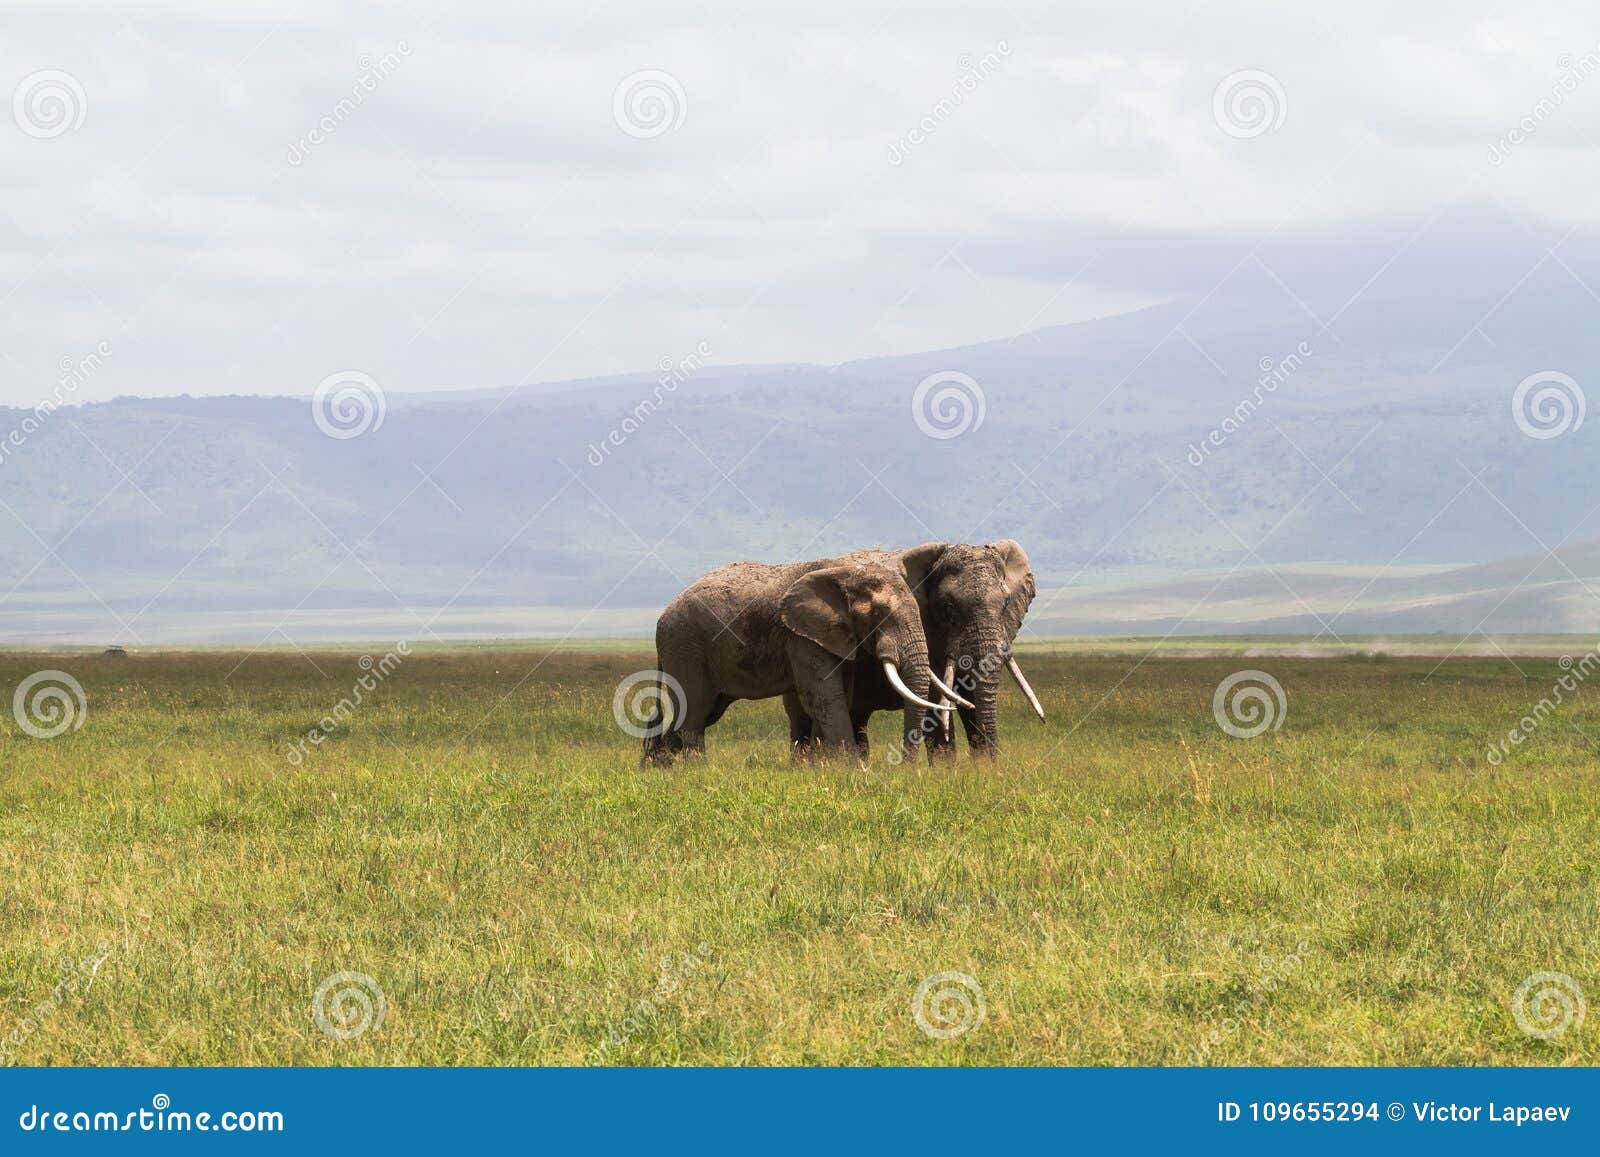 a meeting. two elephants communicate. crater ngorongoro, tanzania